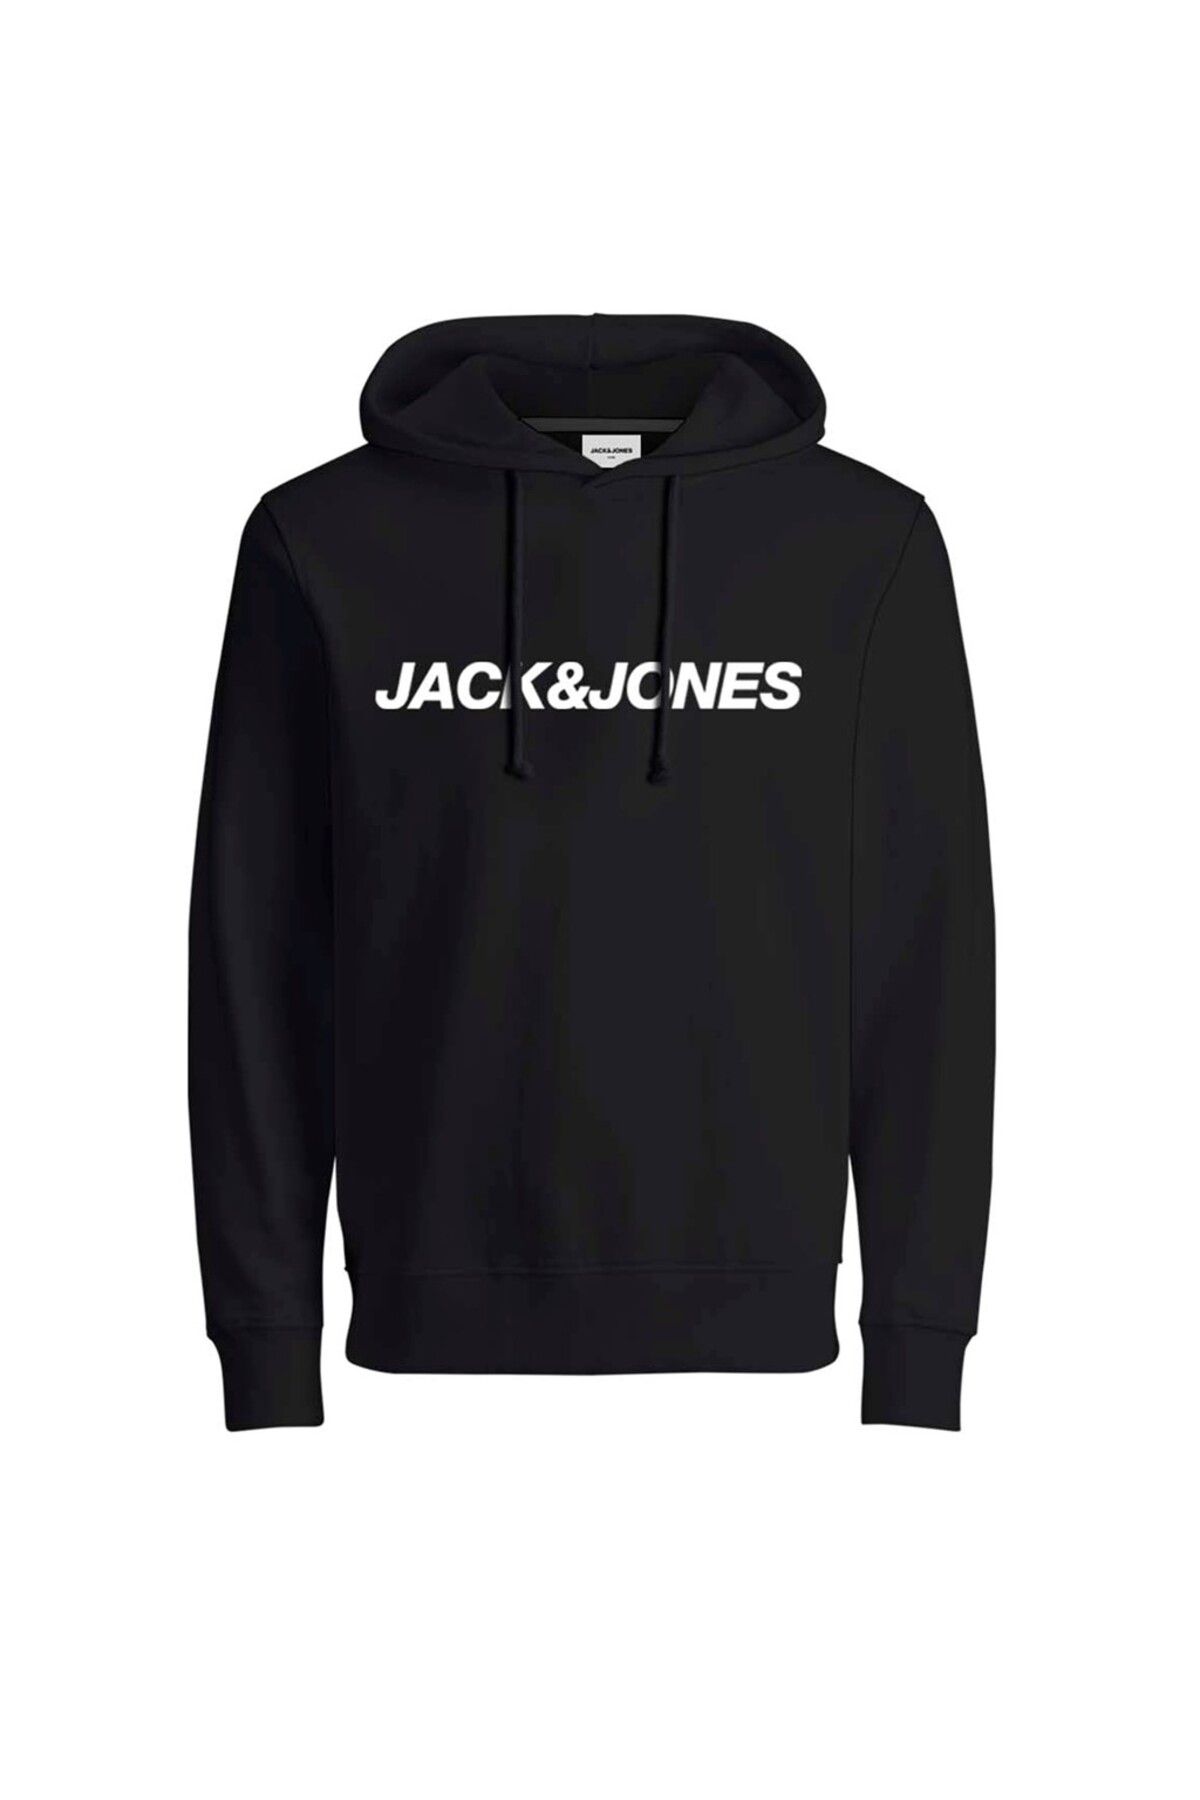 Jack & Jones Erkek Si?yah Sweatshirt 12191178-siyah